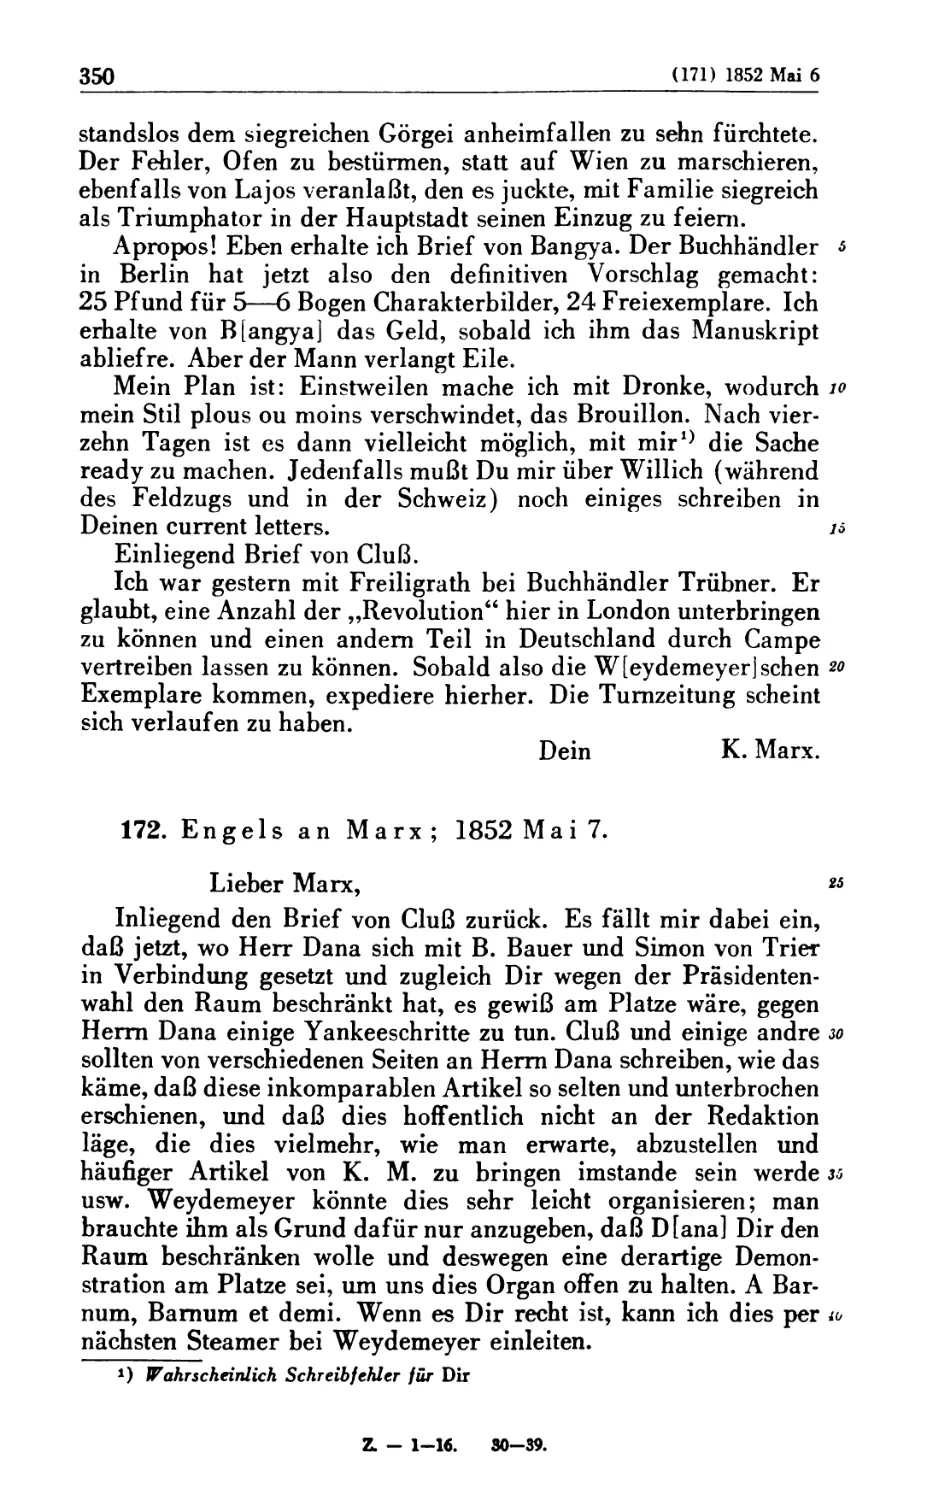 172. Engels an Marx; 1852 Mai 7